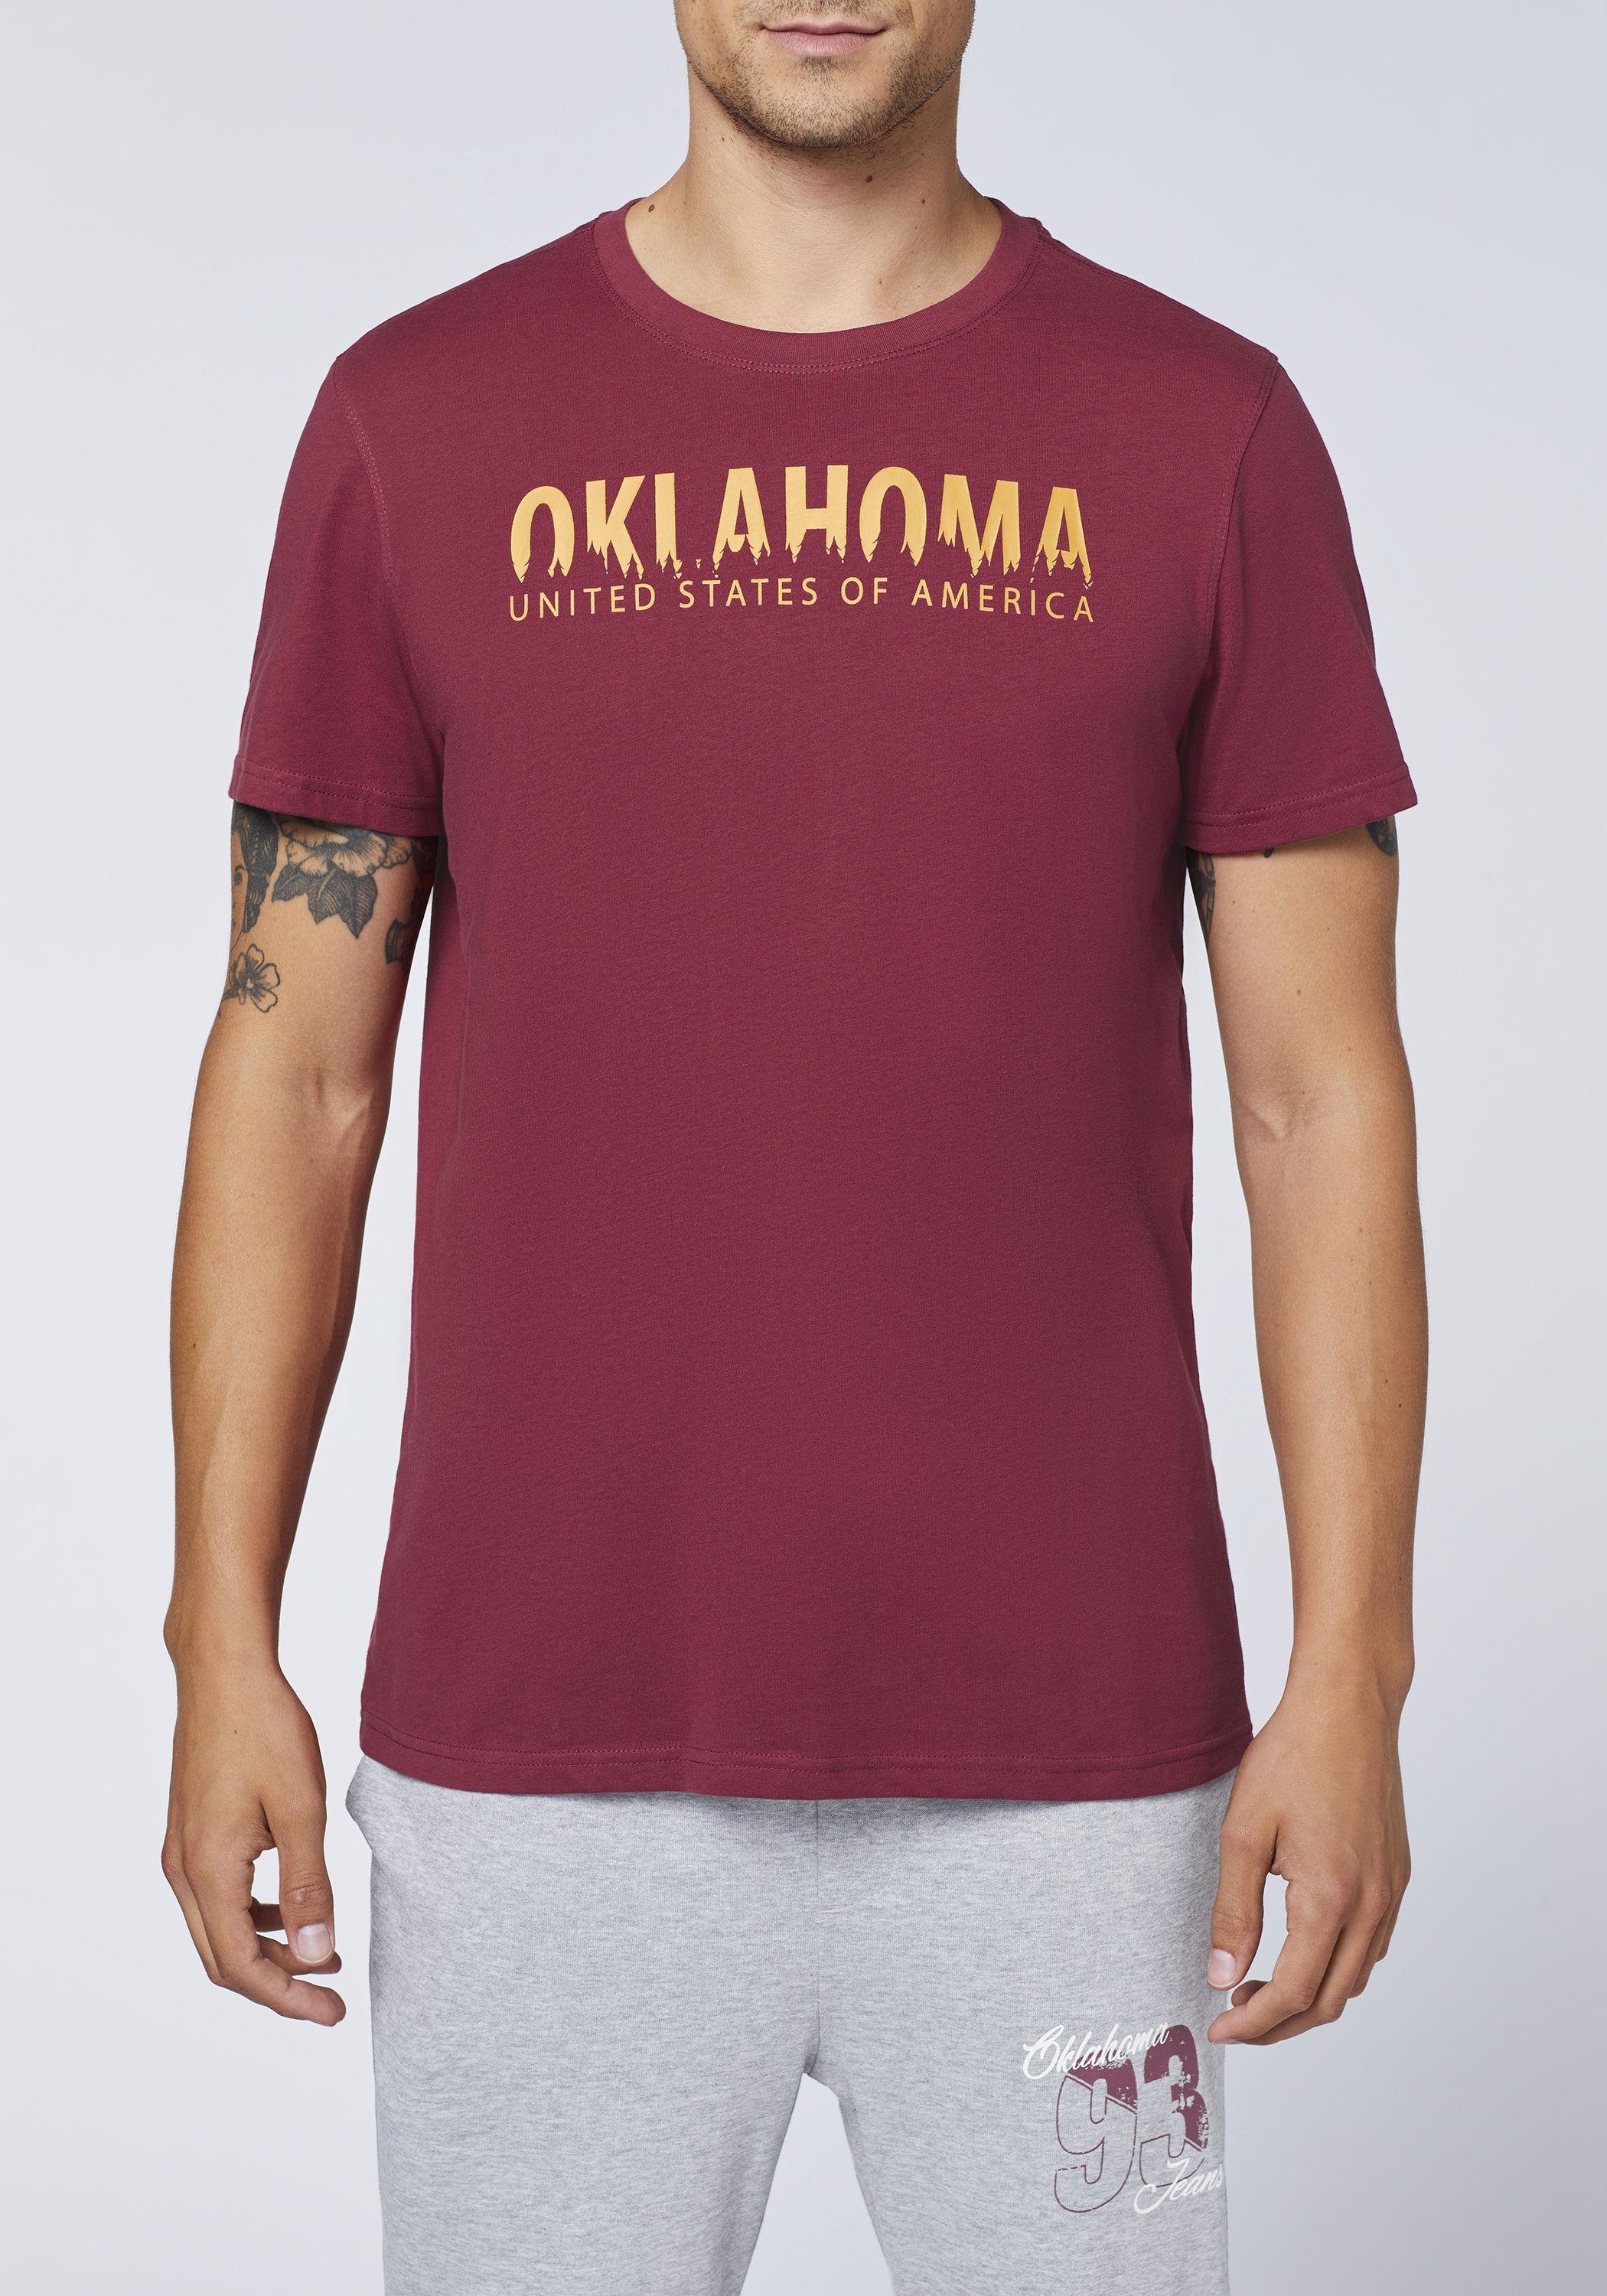 Oklahoma 19-1934 im Nature-Label-Look Tibetan Jeans Print-Shirt Red